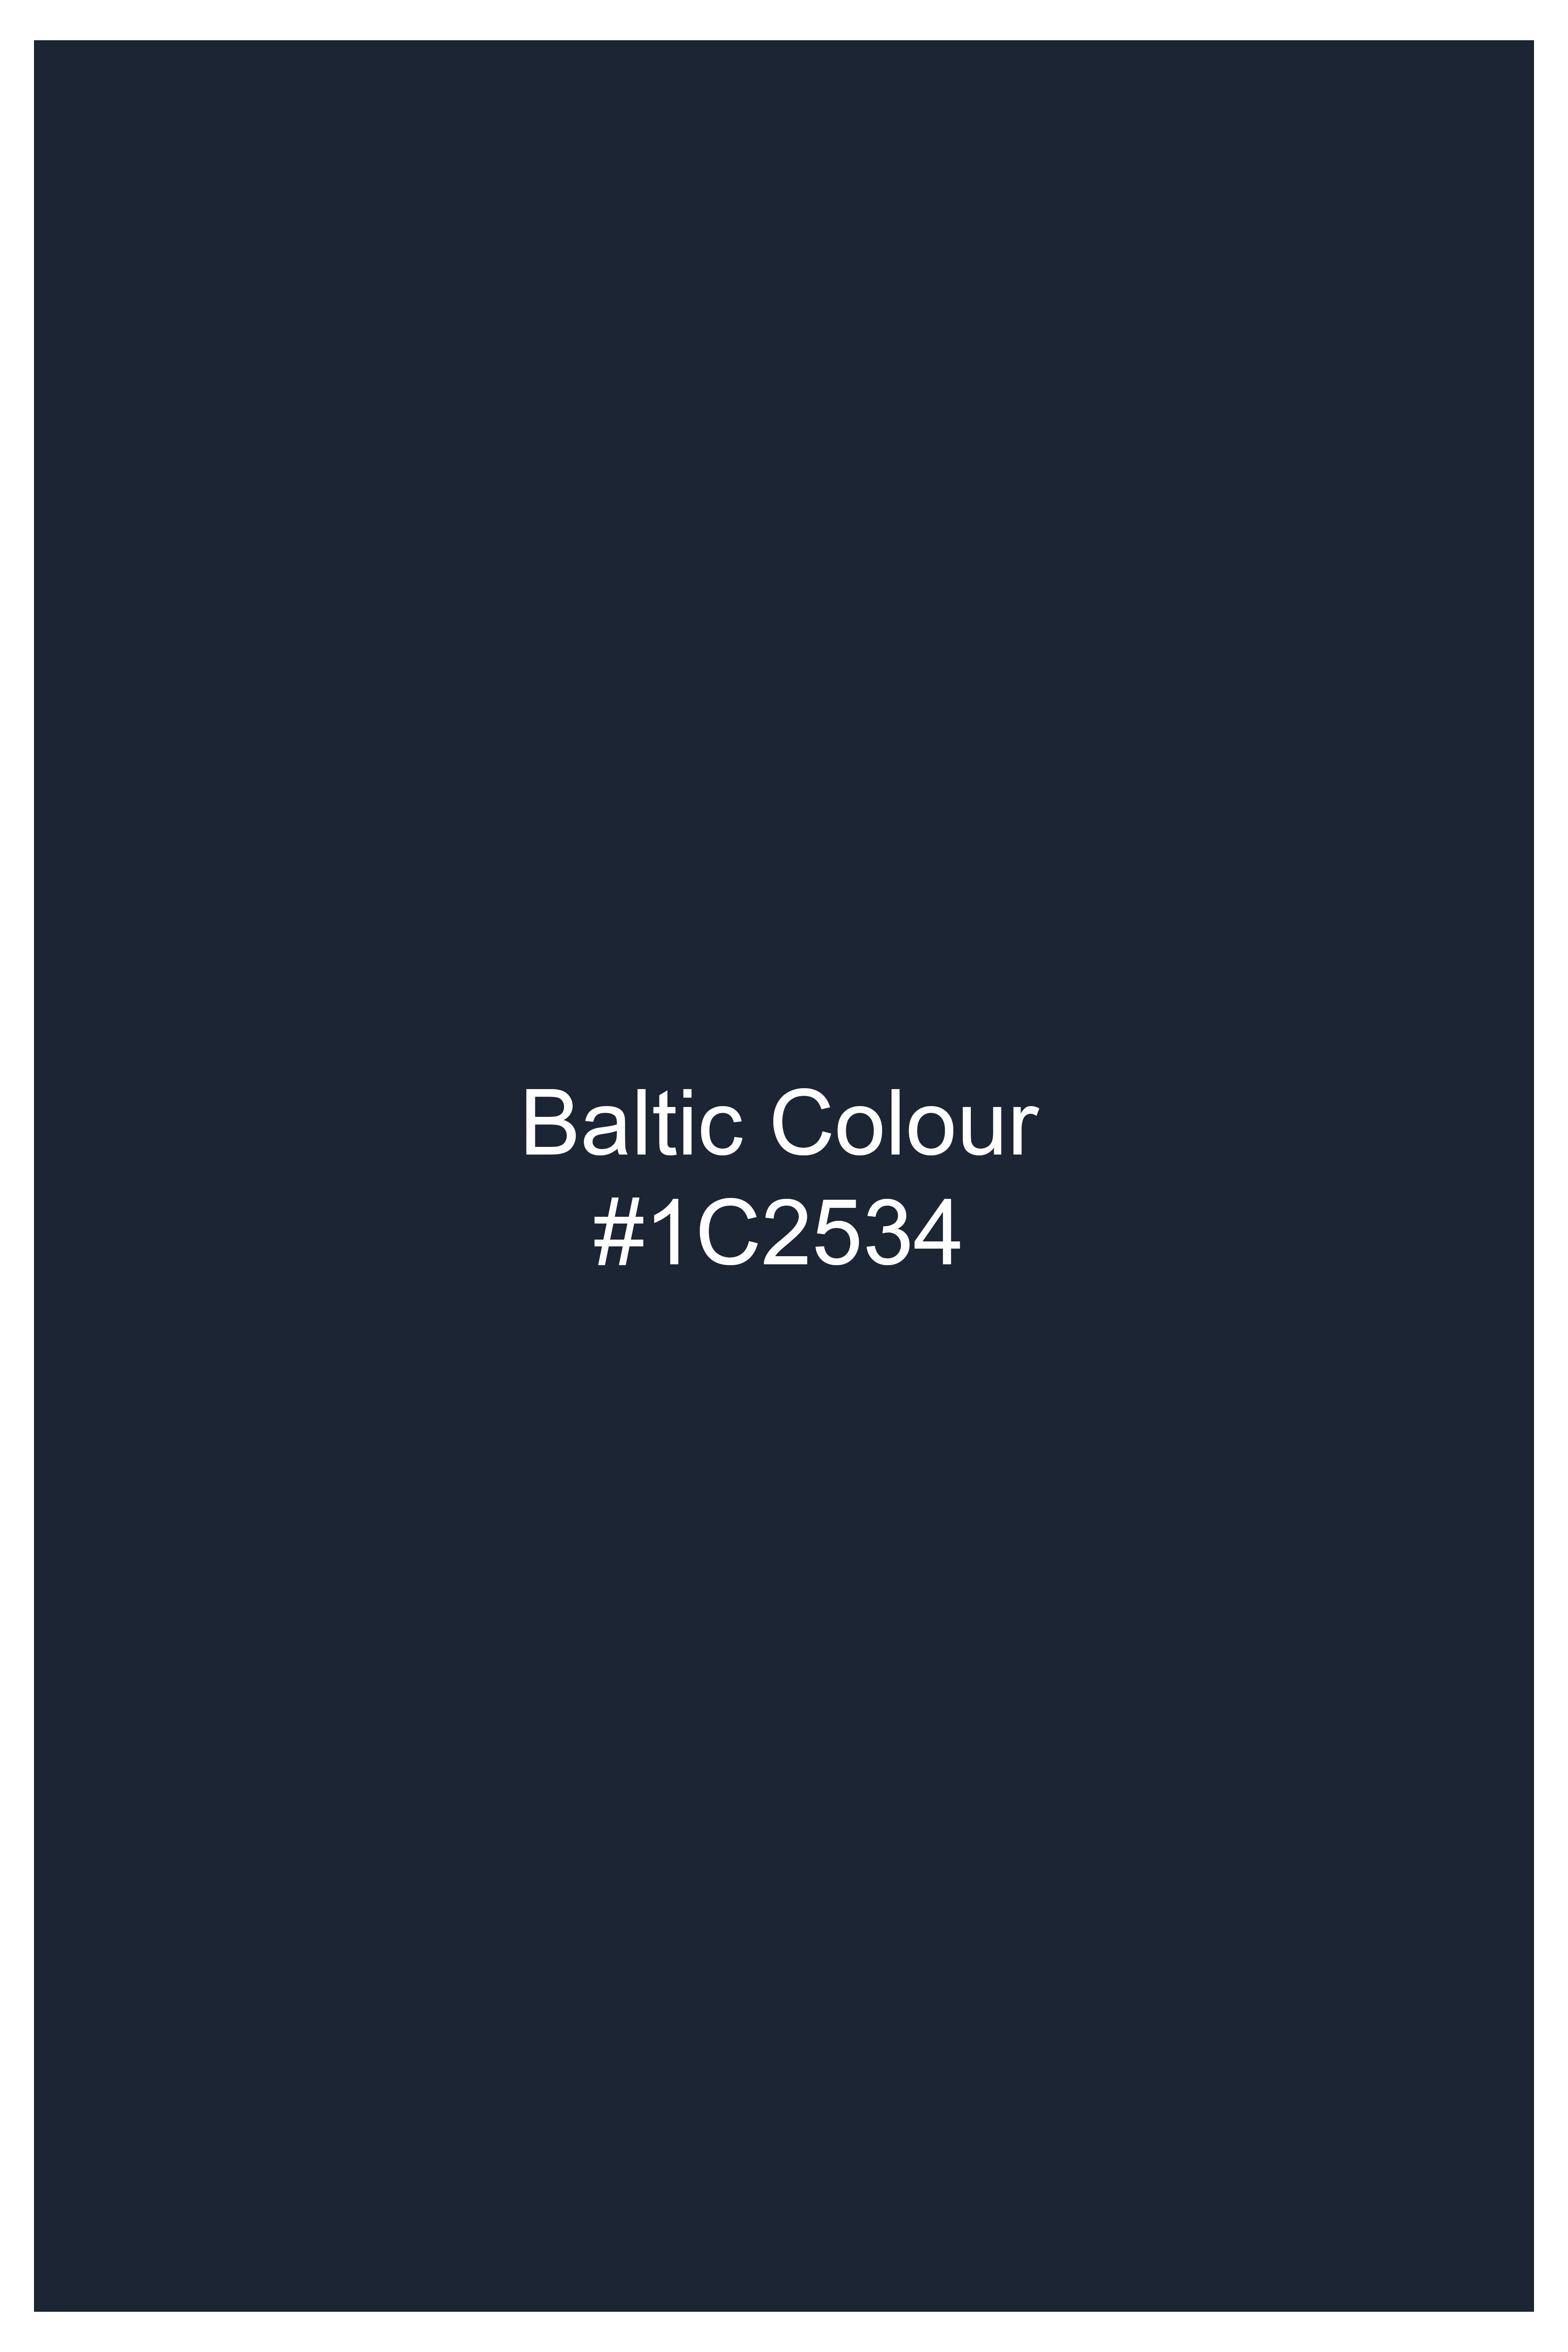 Baltic Blue Windowpane Wool Rich Tuxedo Blazer